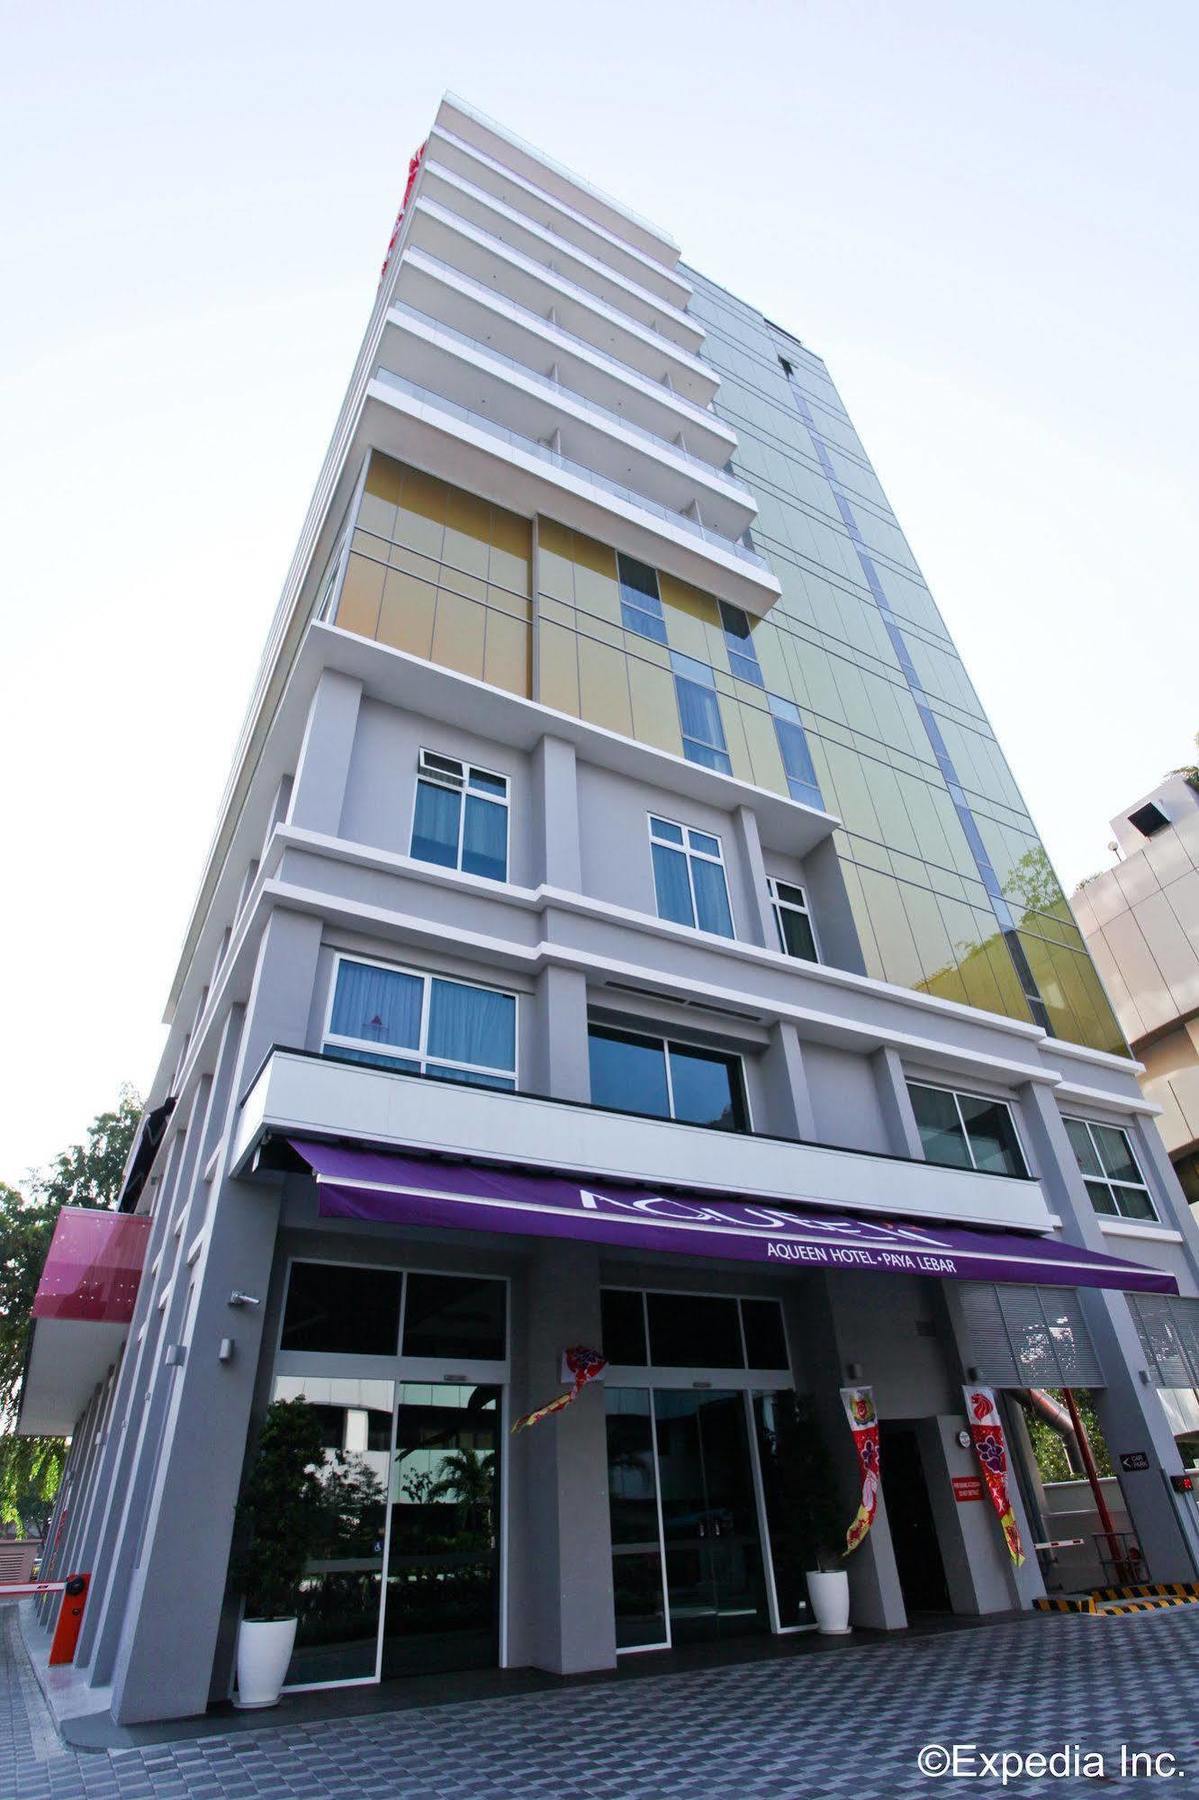 Aqueen Hotel Paya Lebar Сингапур Экстерьер фото